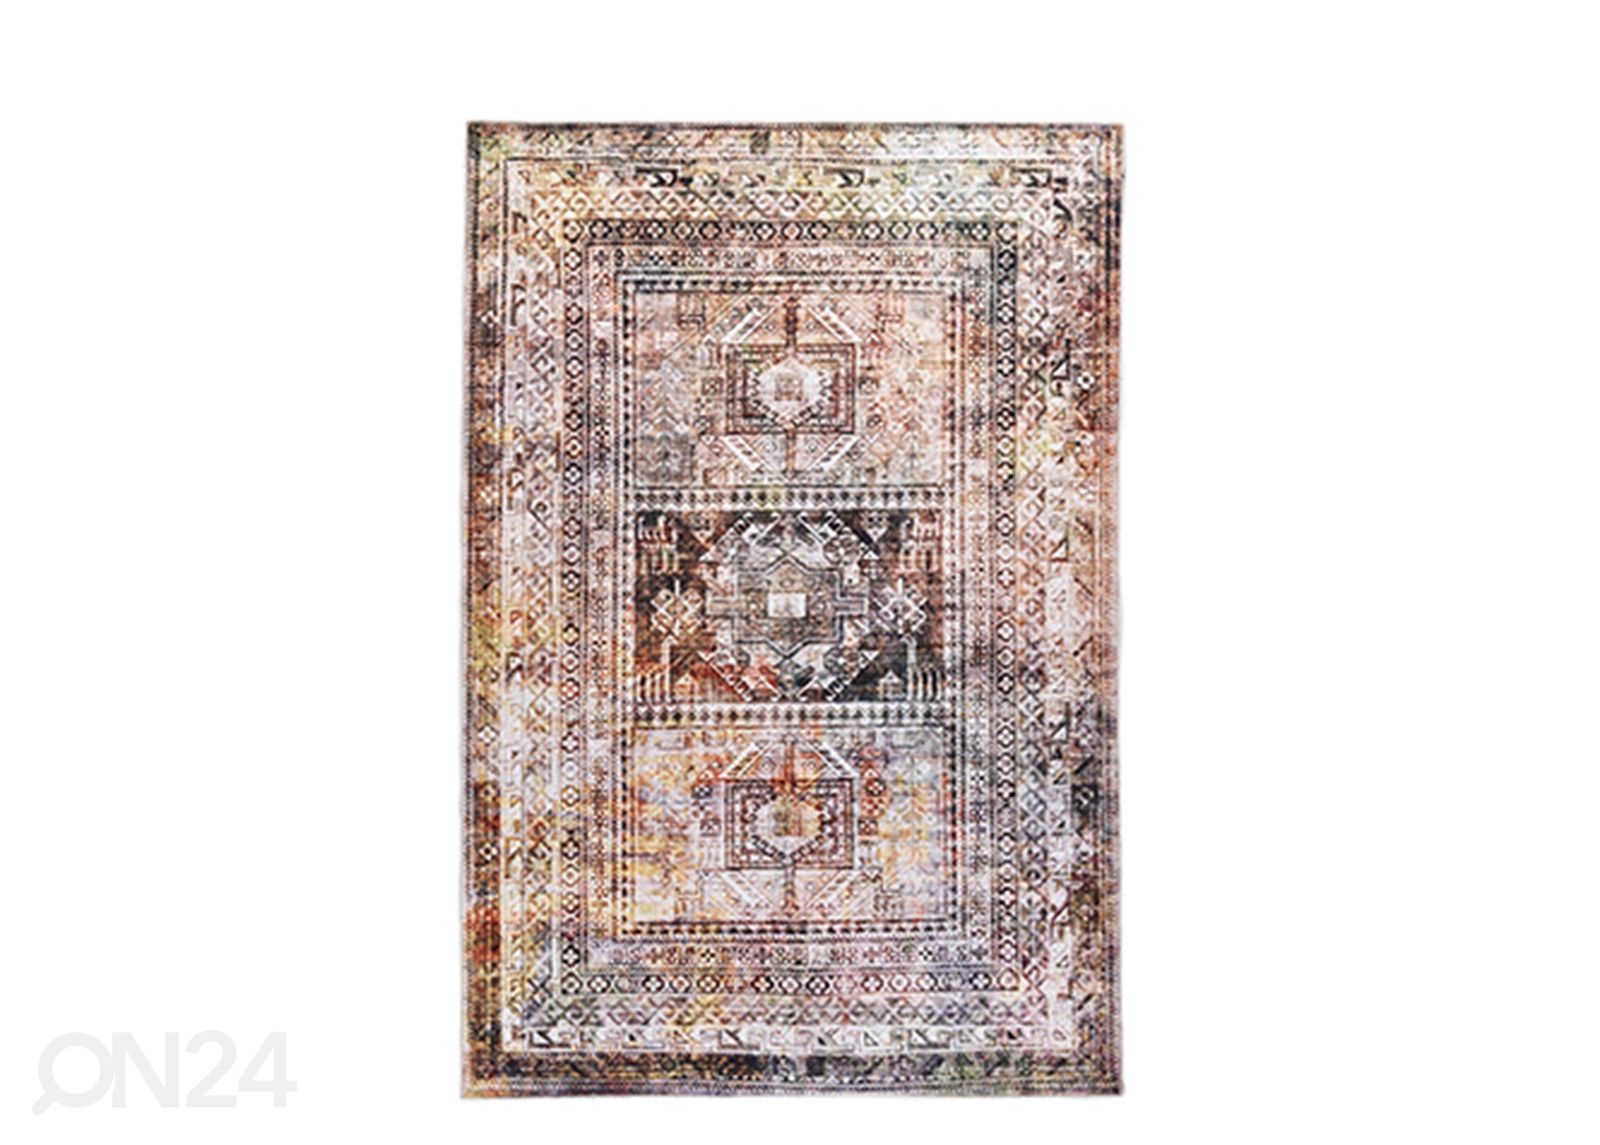 Gino Falcone matto Adara 70x140 cm kuvasuurennos